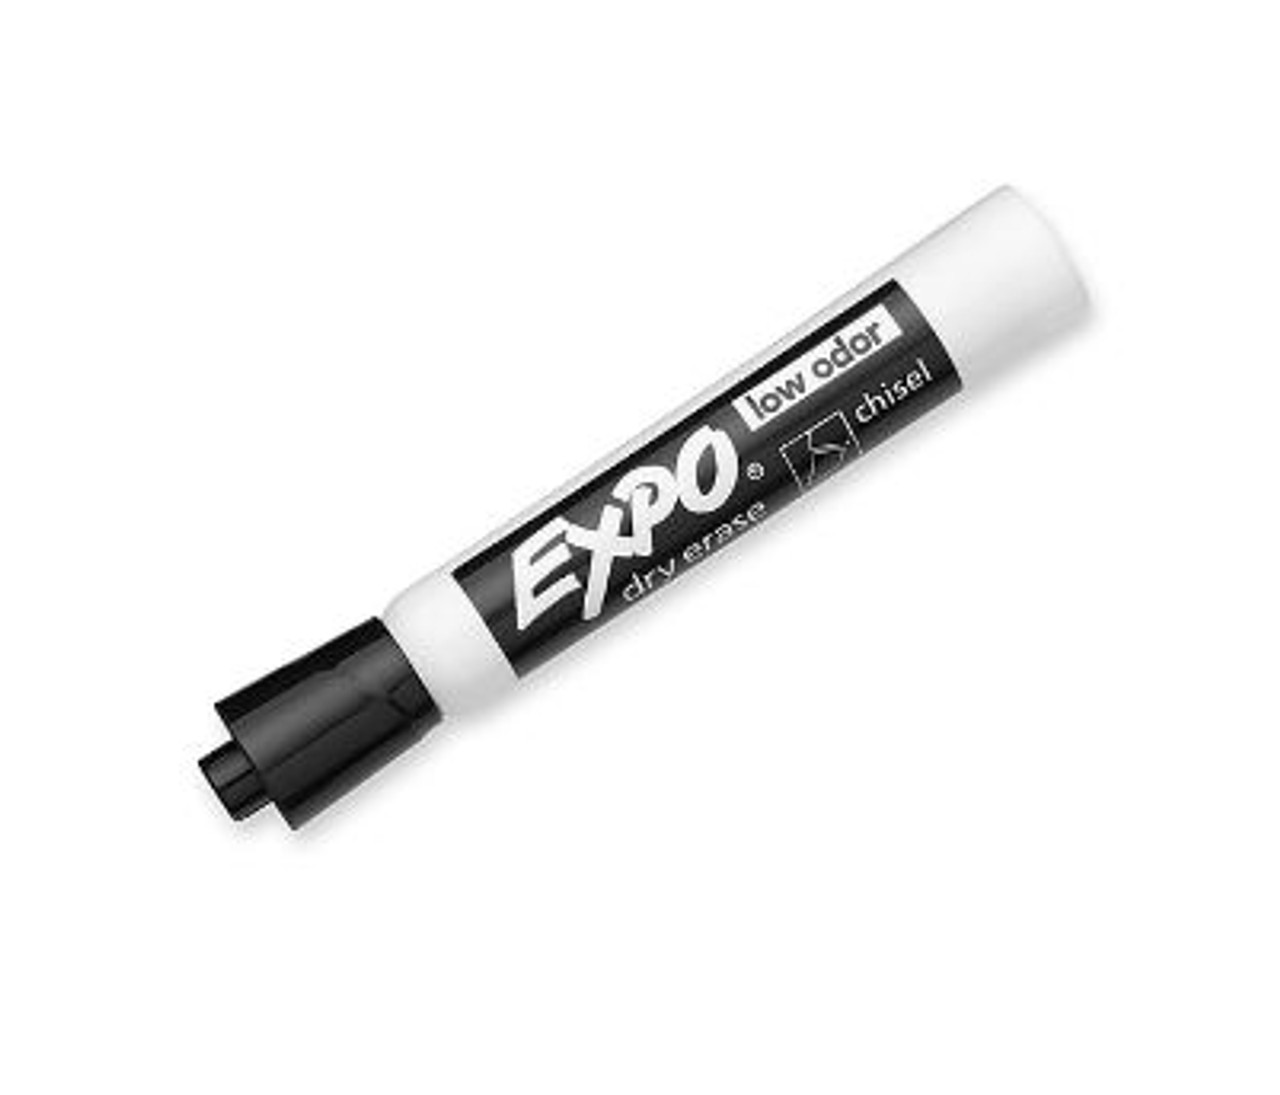 EXPO Low-Odor Dry-Erase Marker, Broad Chisel Tip, Assorted Colors (1 Marker)